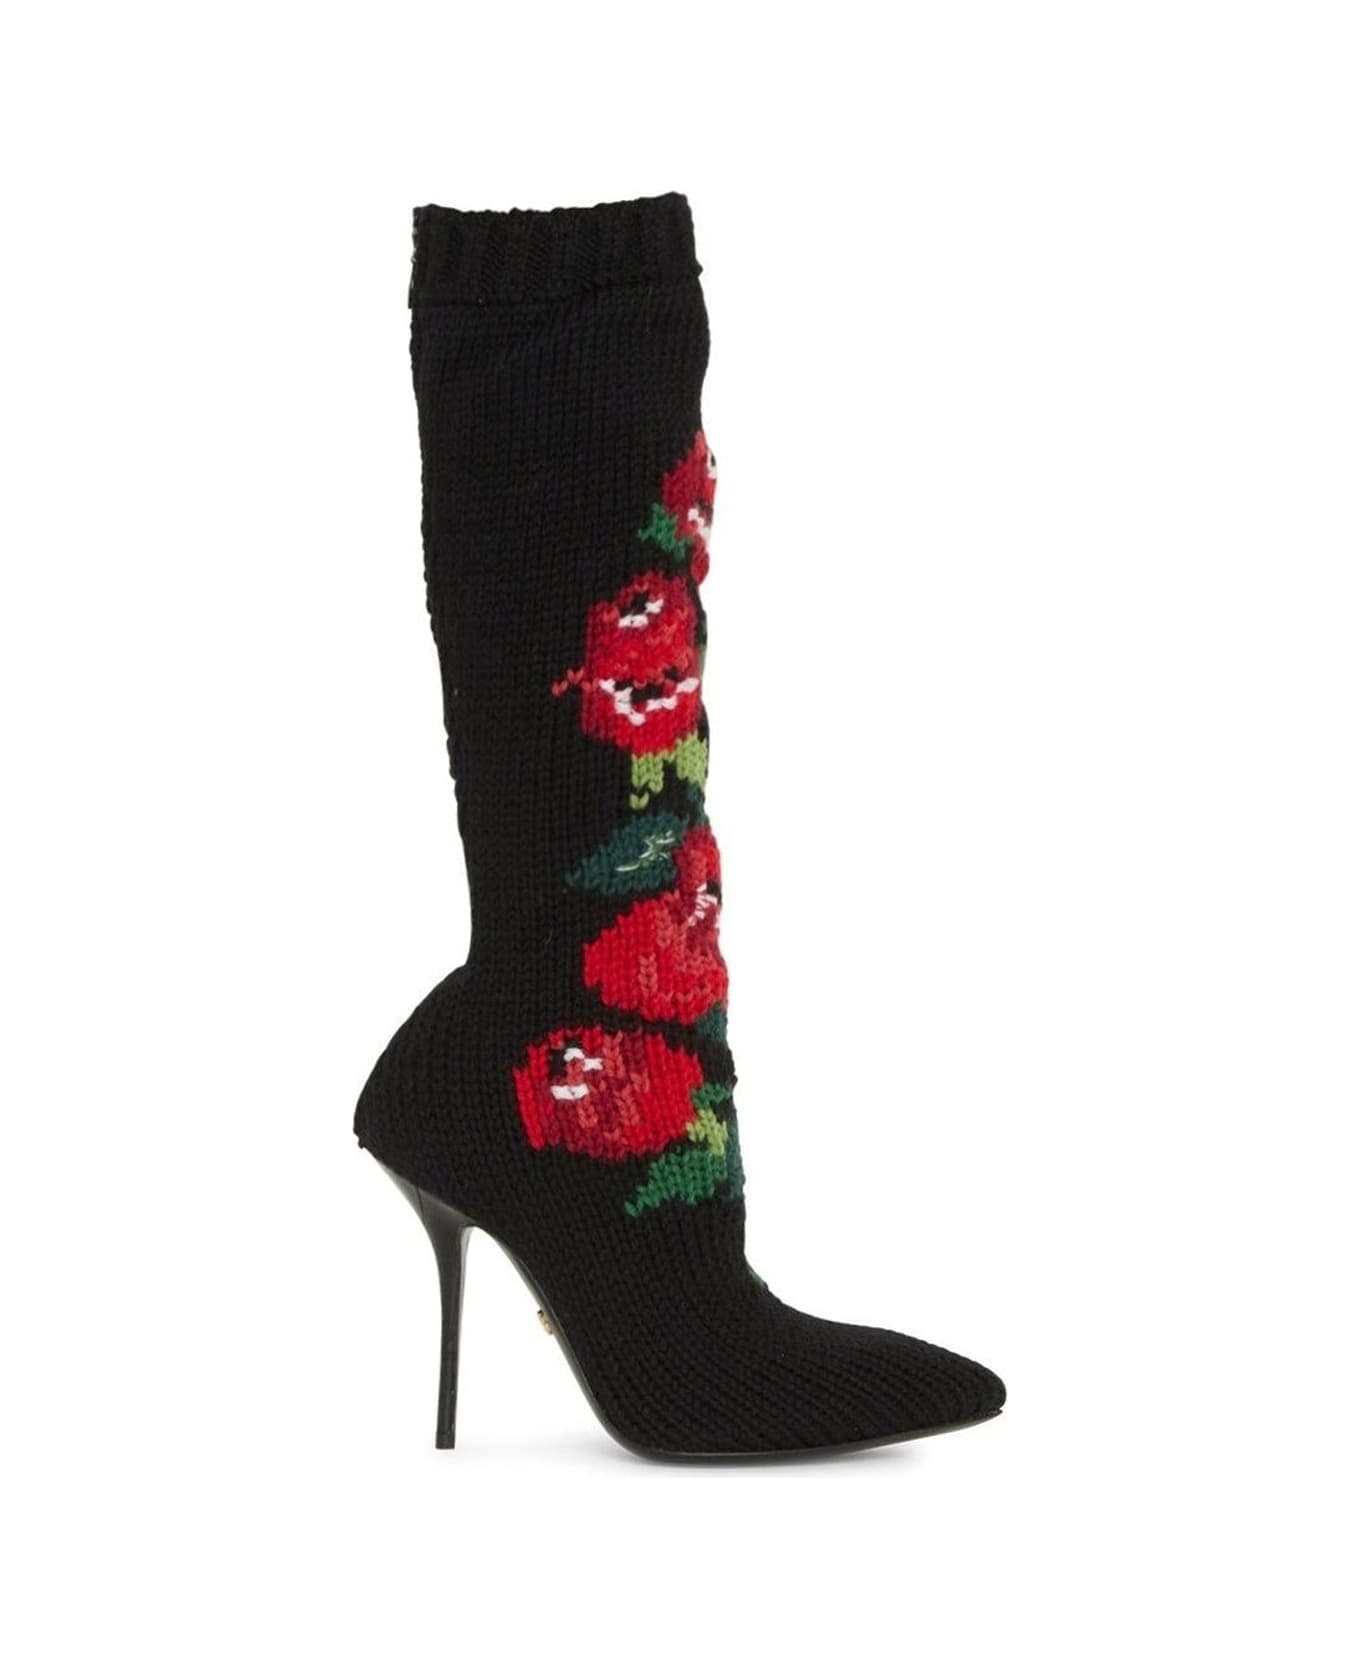 Dolce & Gabbana Wool Flower Boots - Black